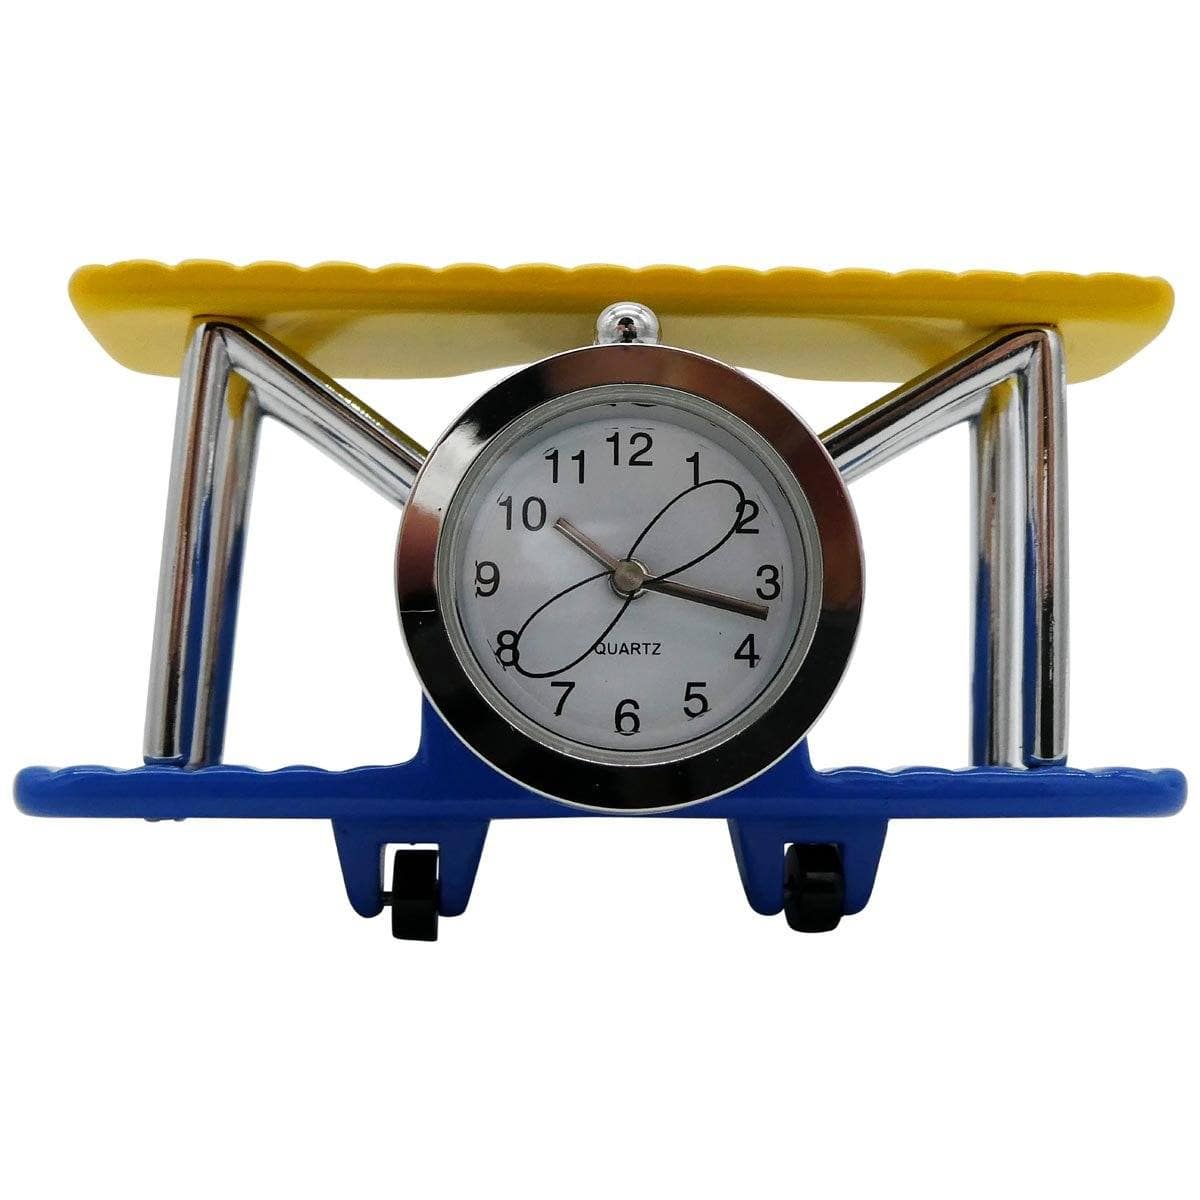 Pilot Toys Blue and Yellow Biplane Desk Clock